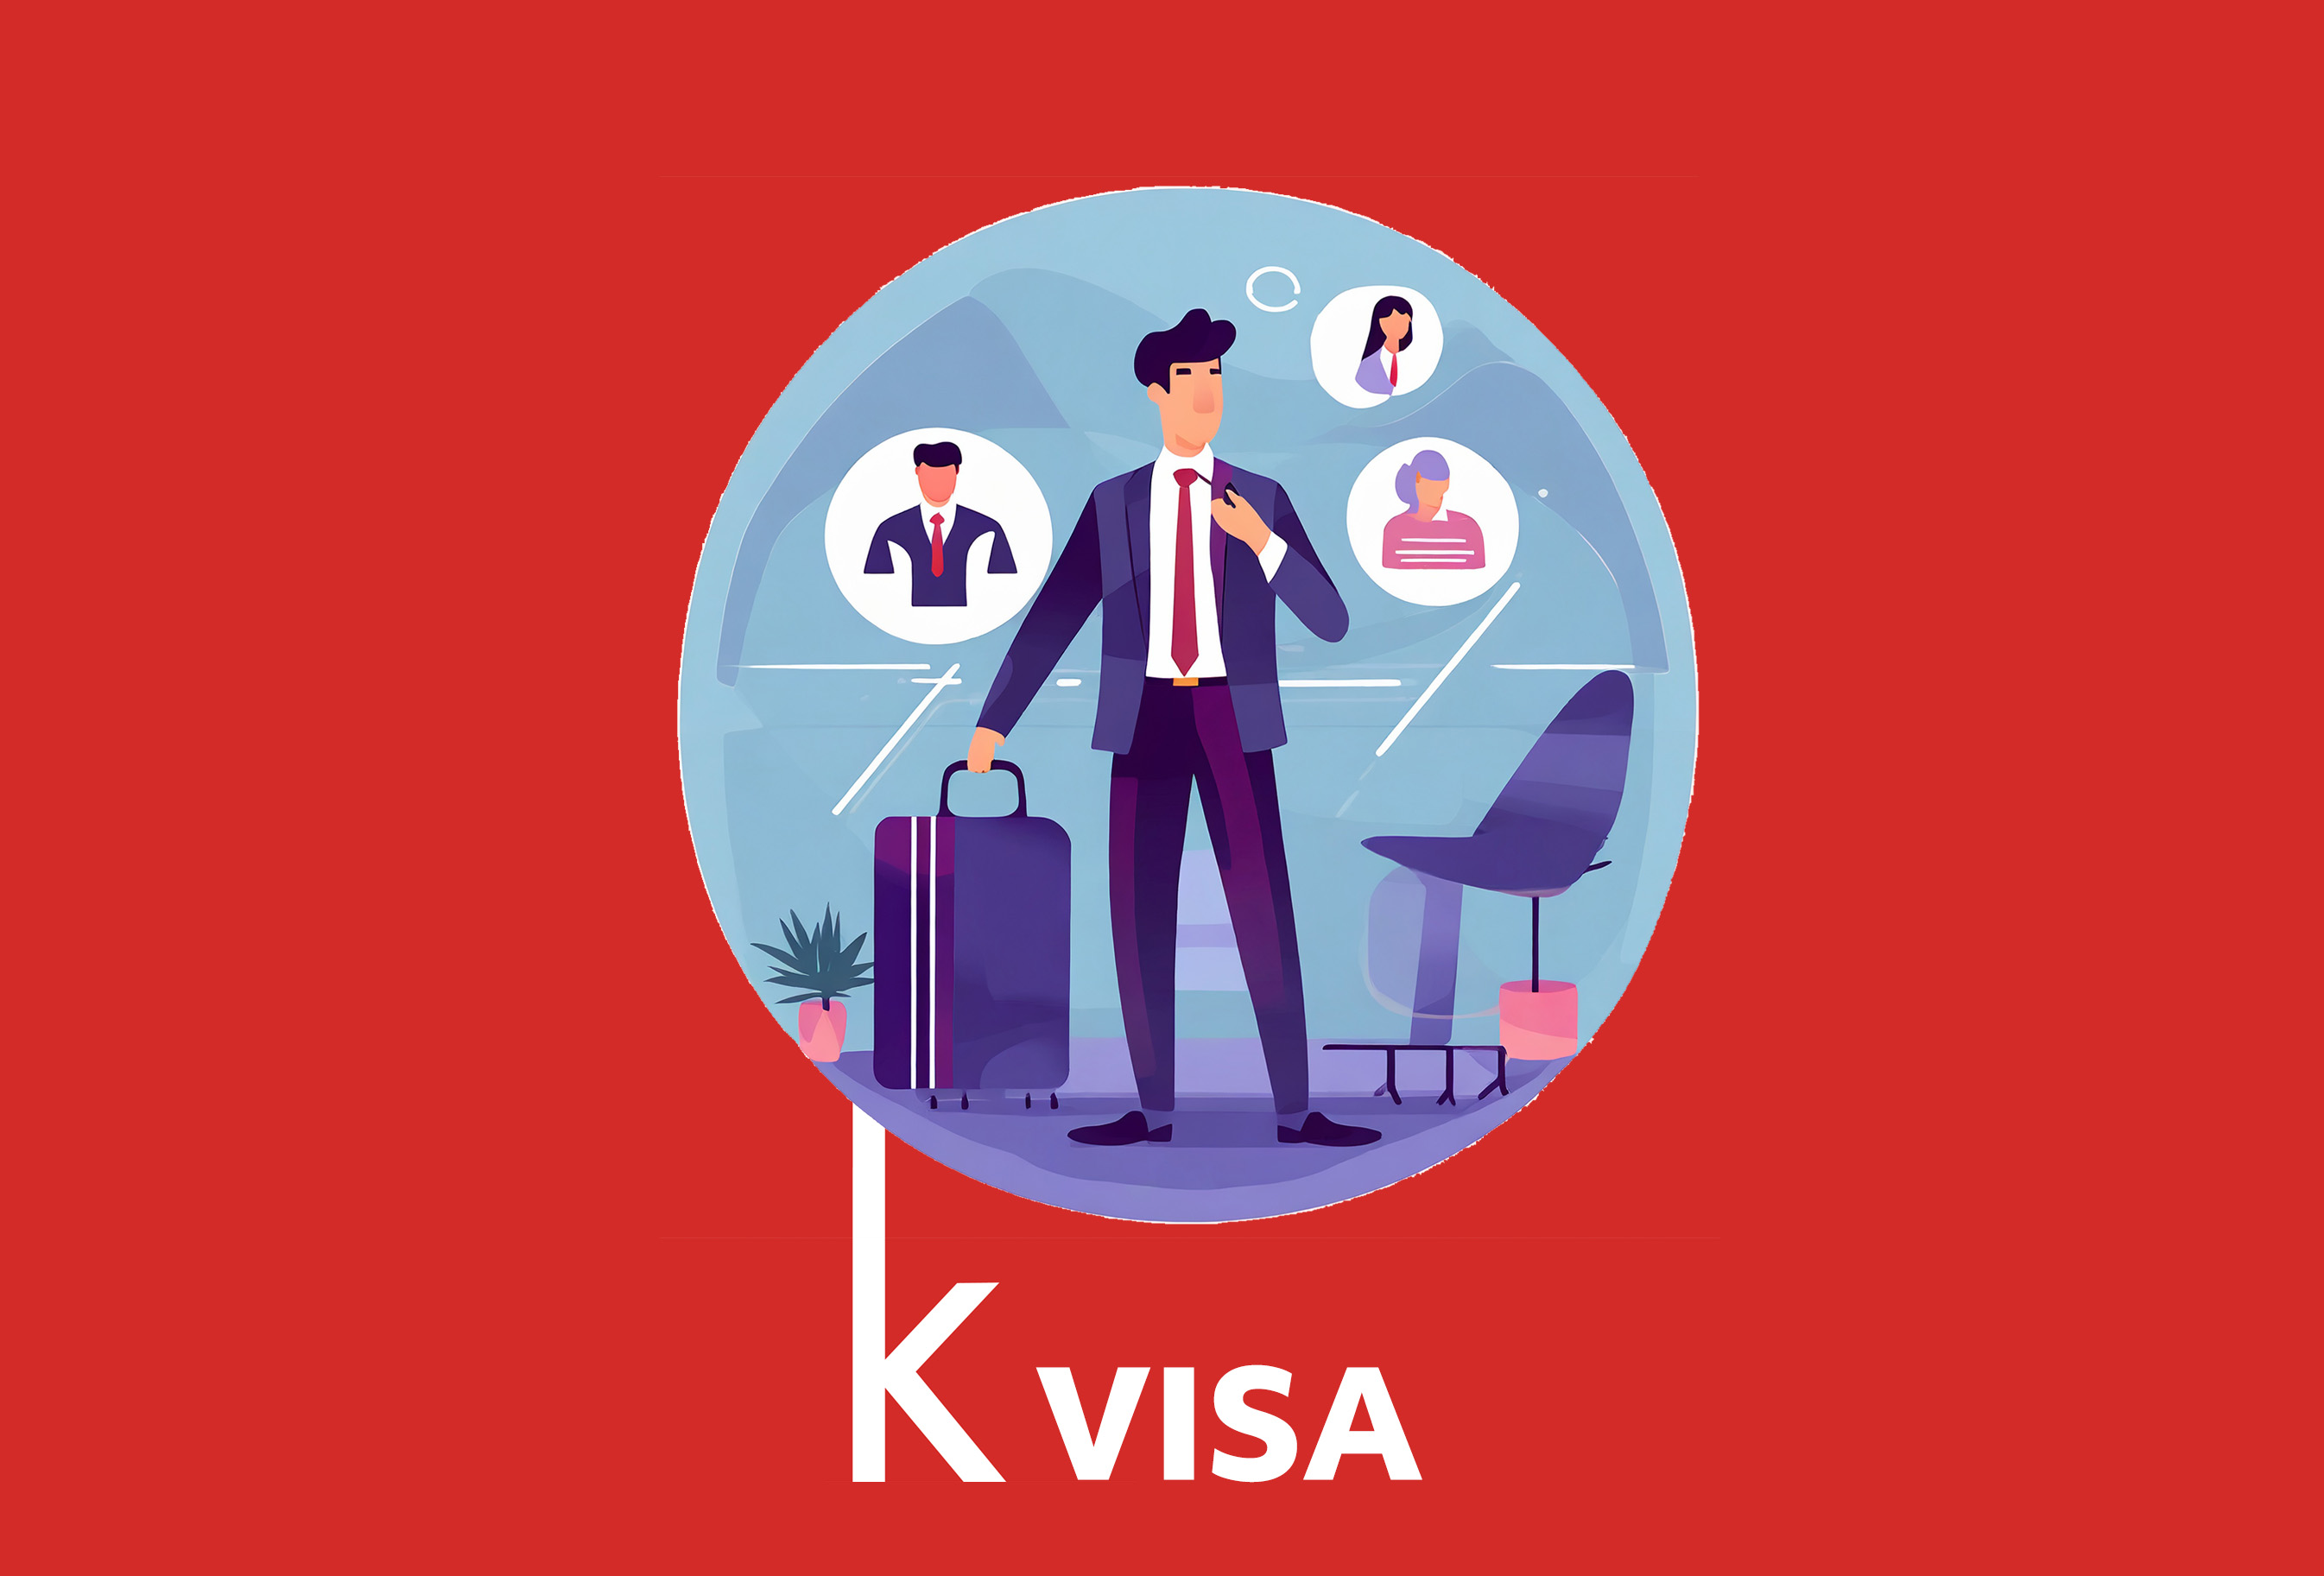 D10 Visa profile.jpg